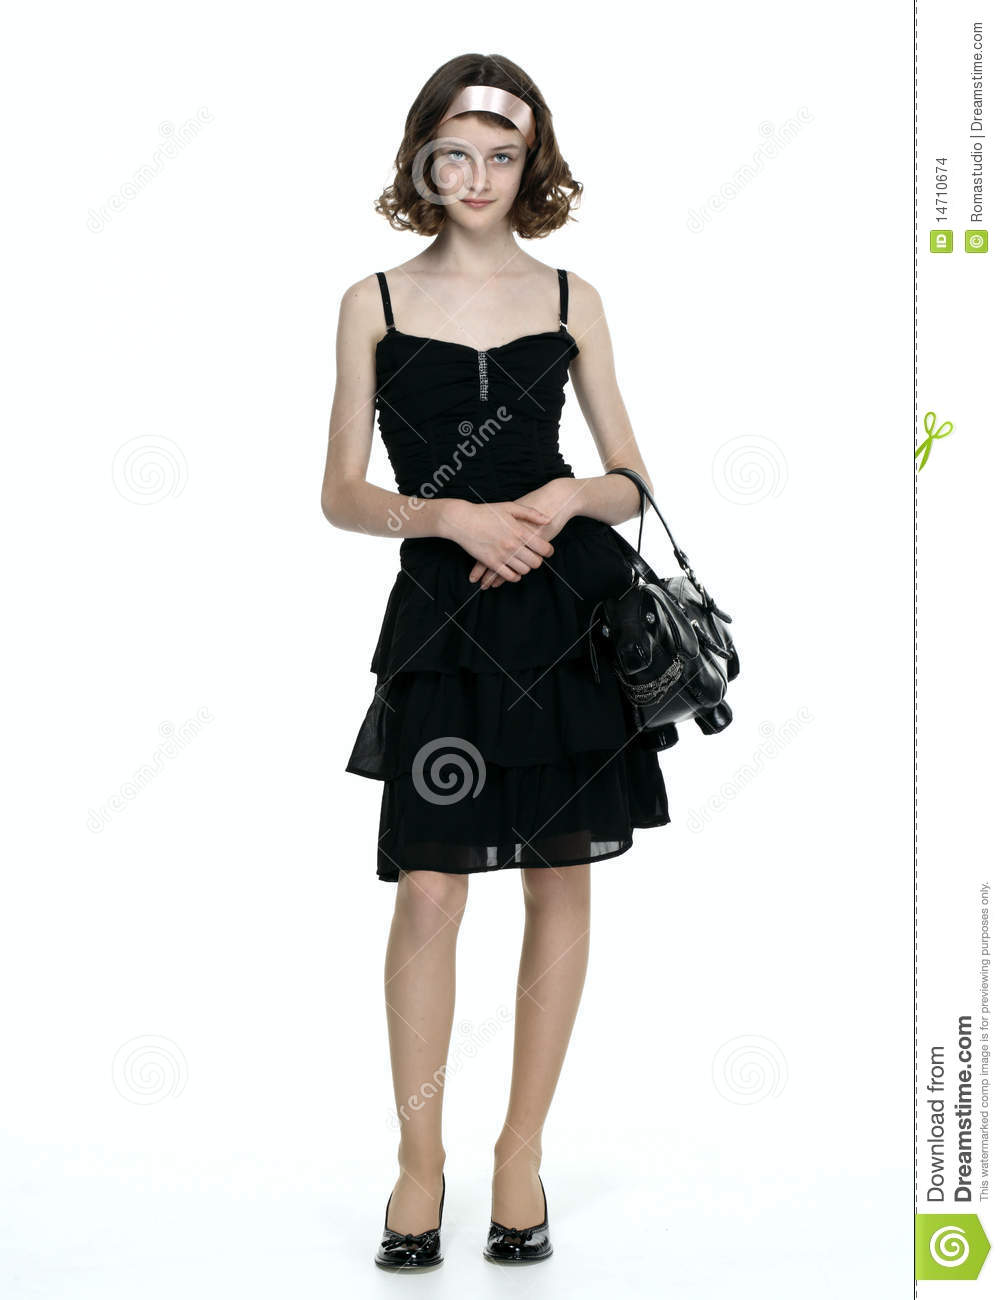 Beautyfull Teenage Girl Posing In Black Dress Stock Images   Image    